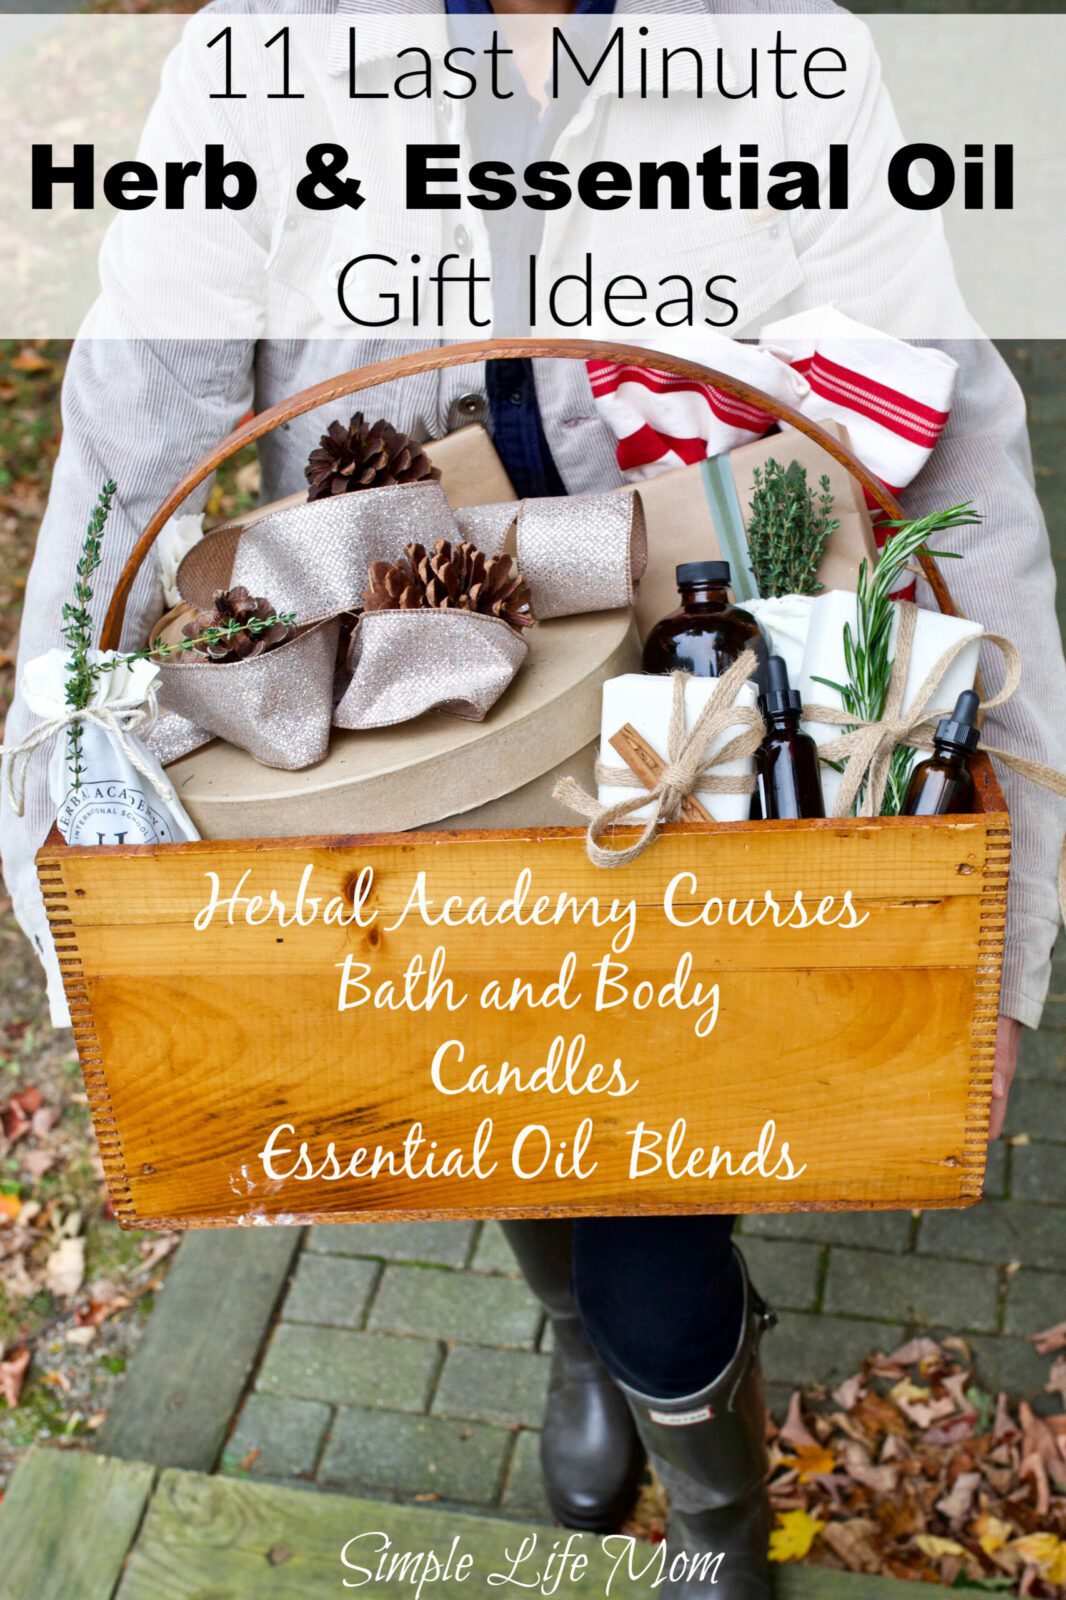 10 Easy Christmas Gift Ideas – Let's DIY It All – With Kritsyn Merkley |  Homemade christmas gifts, Easy christmas gifts, Diy christmas gifts